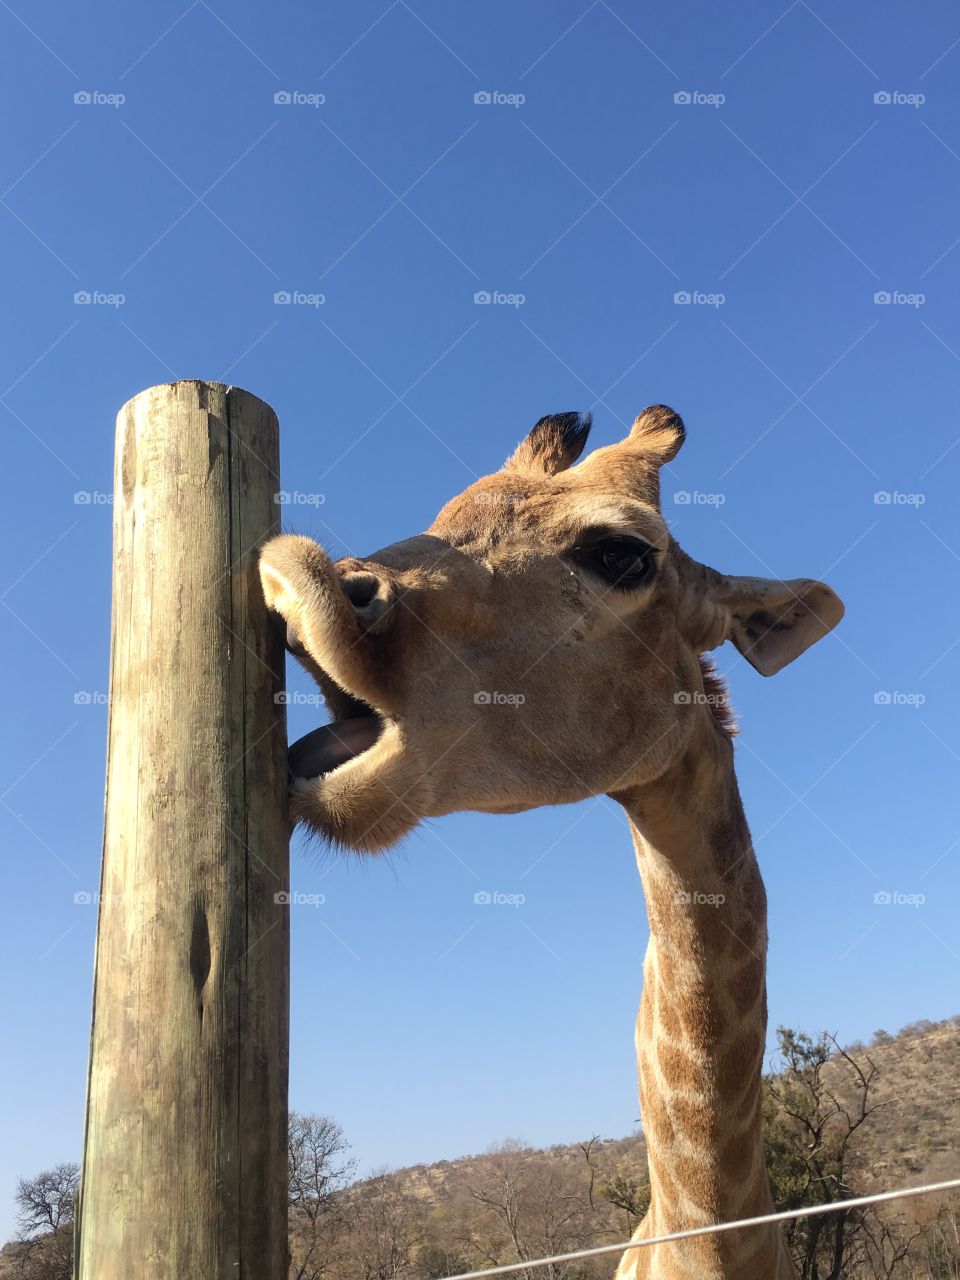 Giraffe loves pole